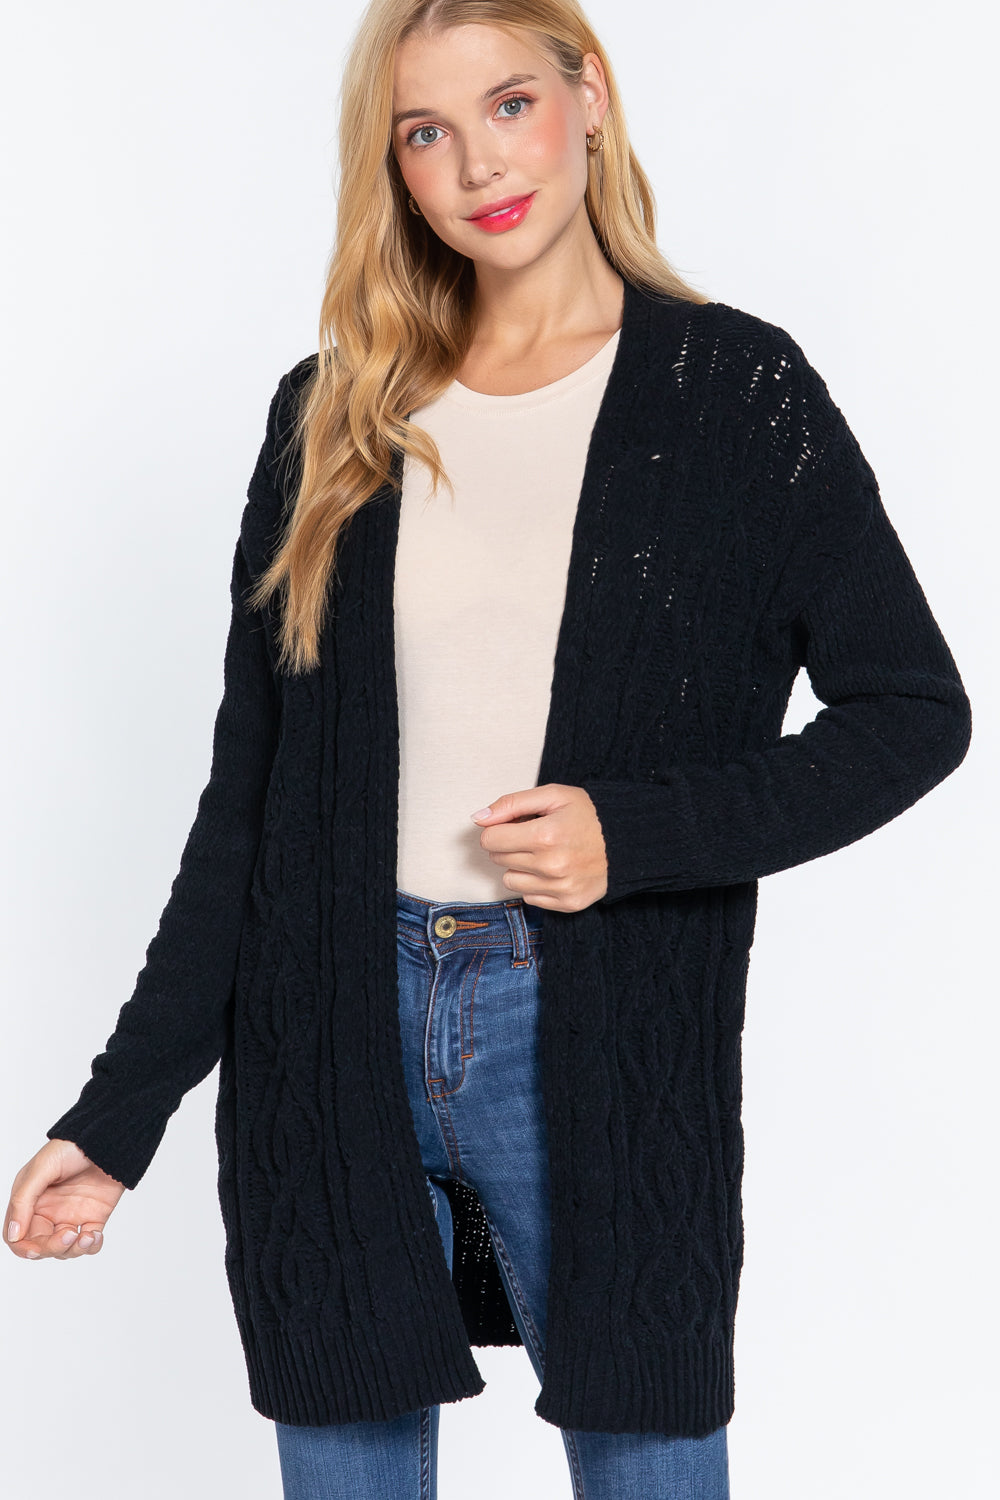 Women's black long sleeve open front chenille cardigan sweater